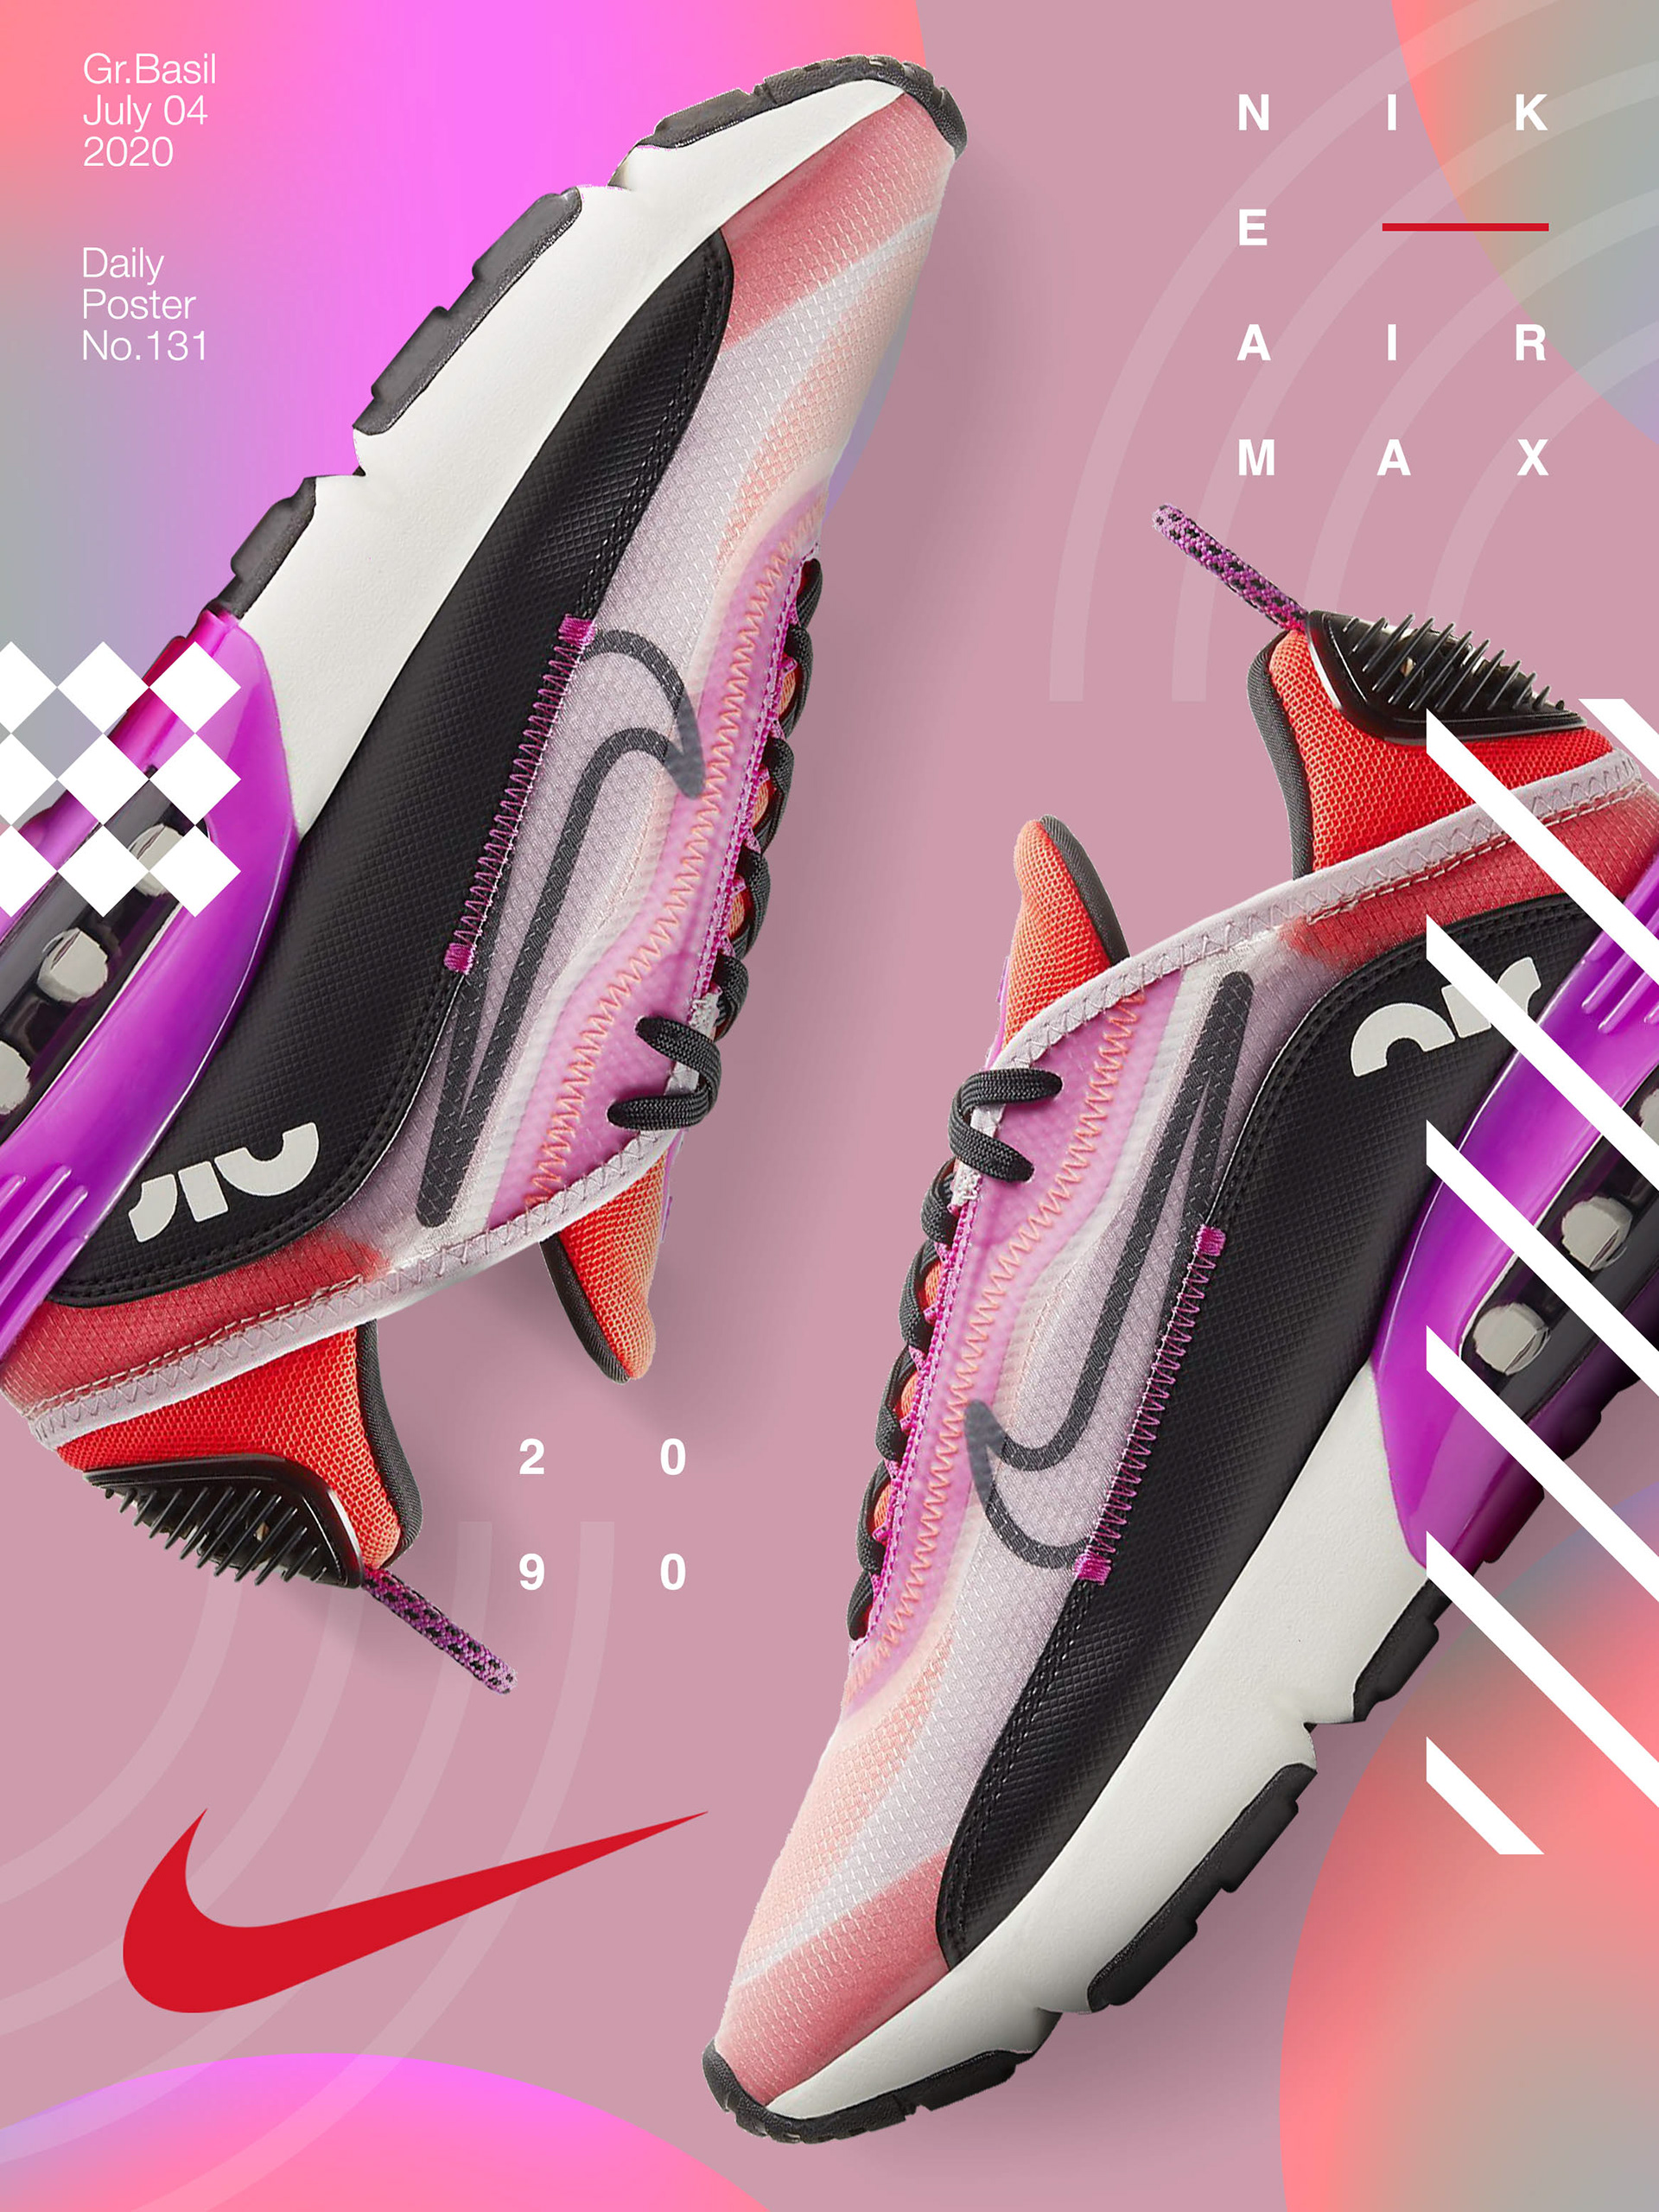 Nike Poster :: Behance